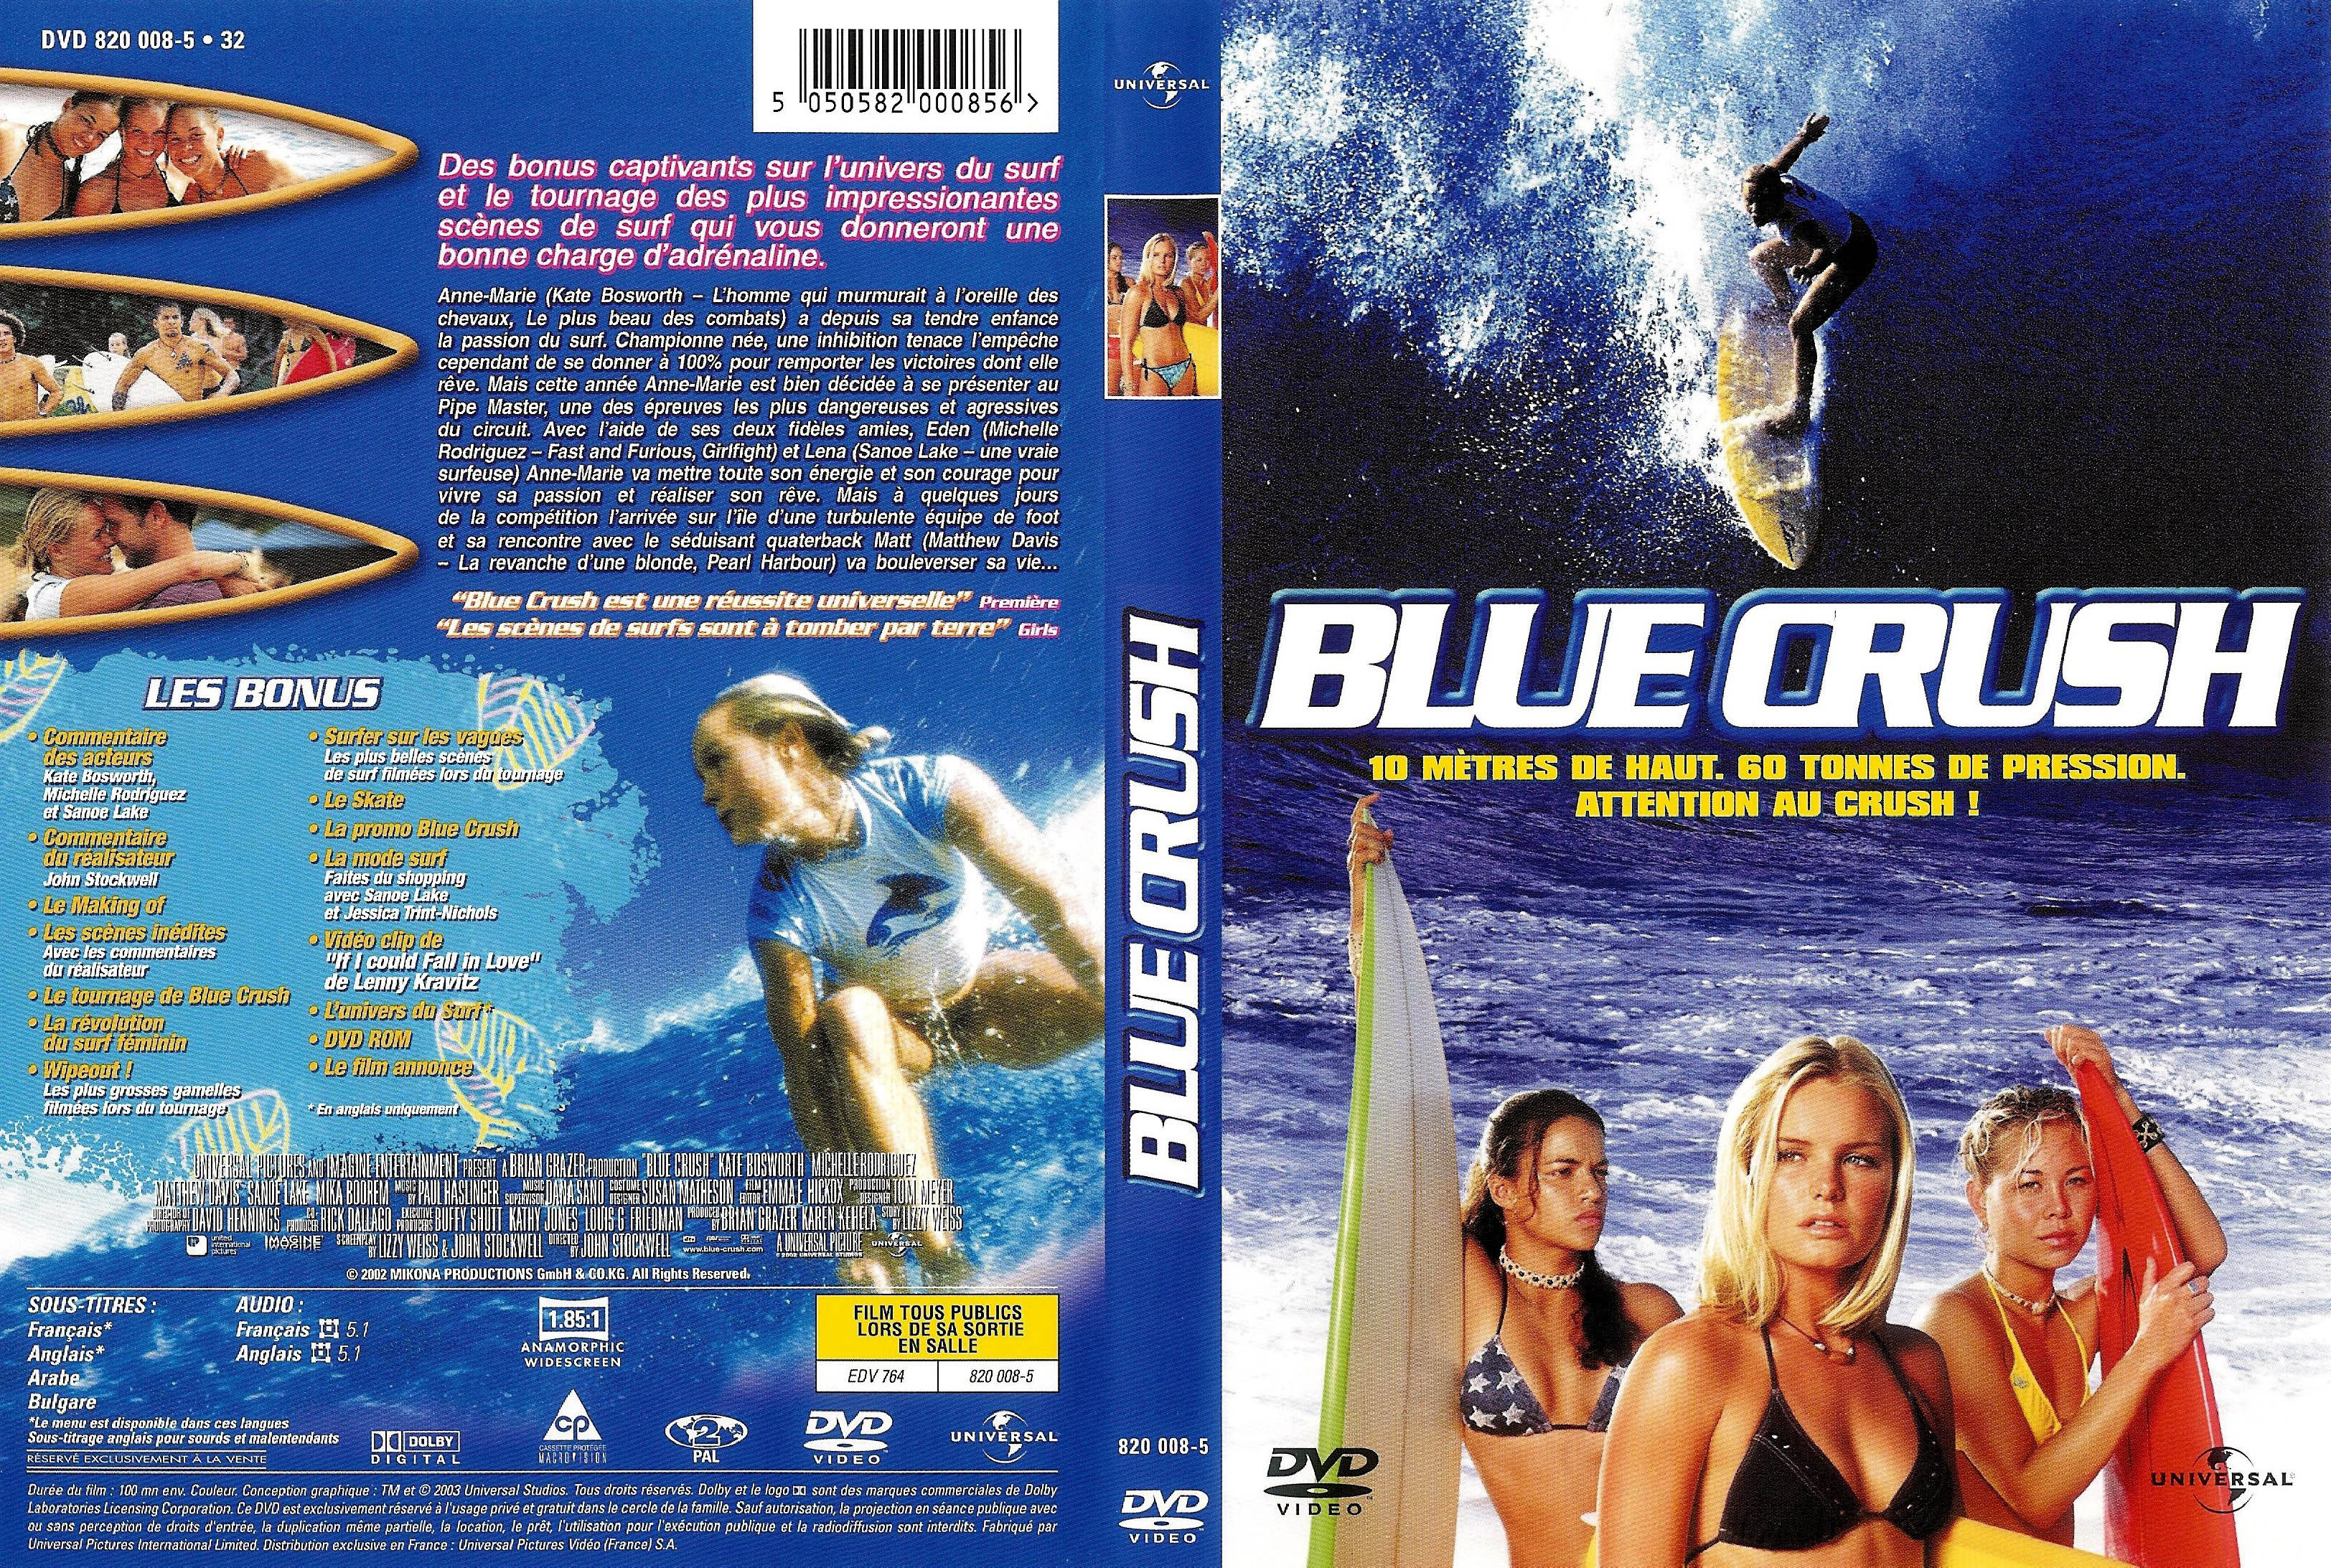 Jaquette DVD Blue crush